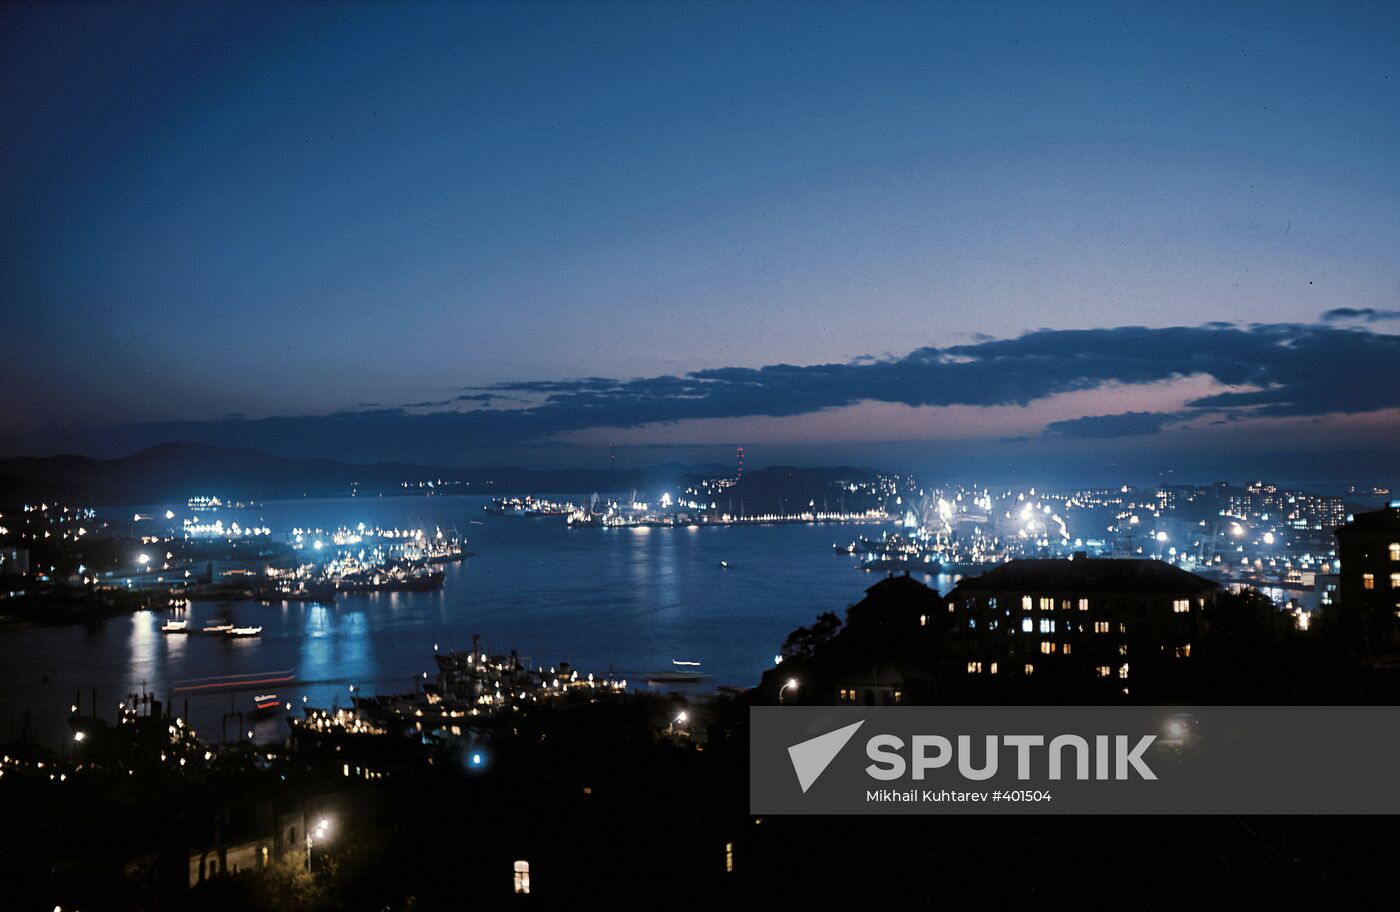 Vladivostok at night